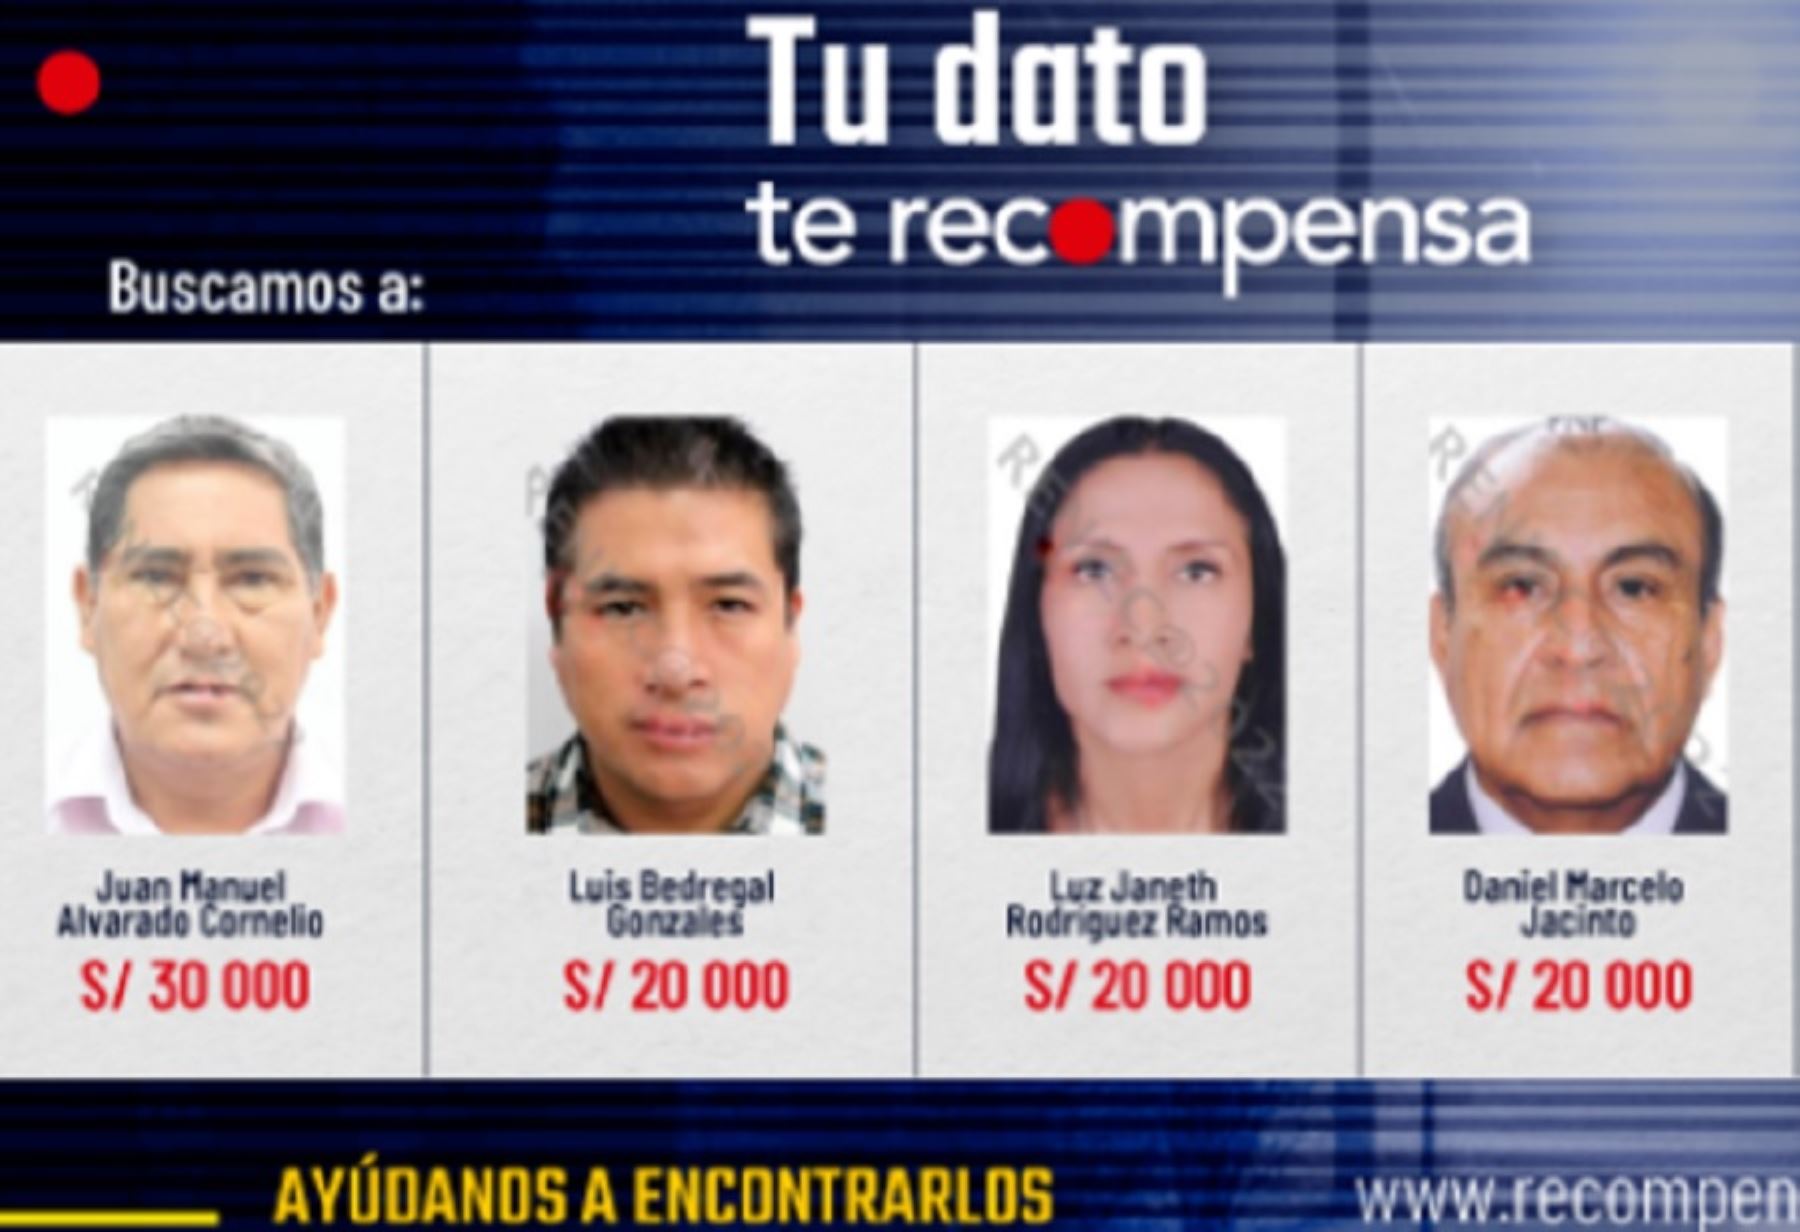 Programa de Recompensas busca a suspendido gobernador de Huánuco y exalcalde de Trujillo